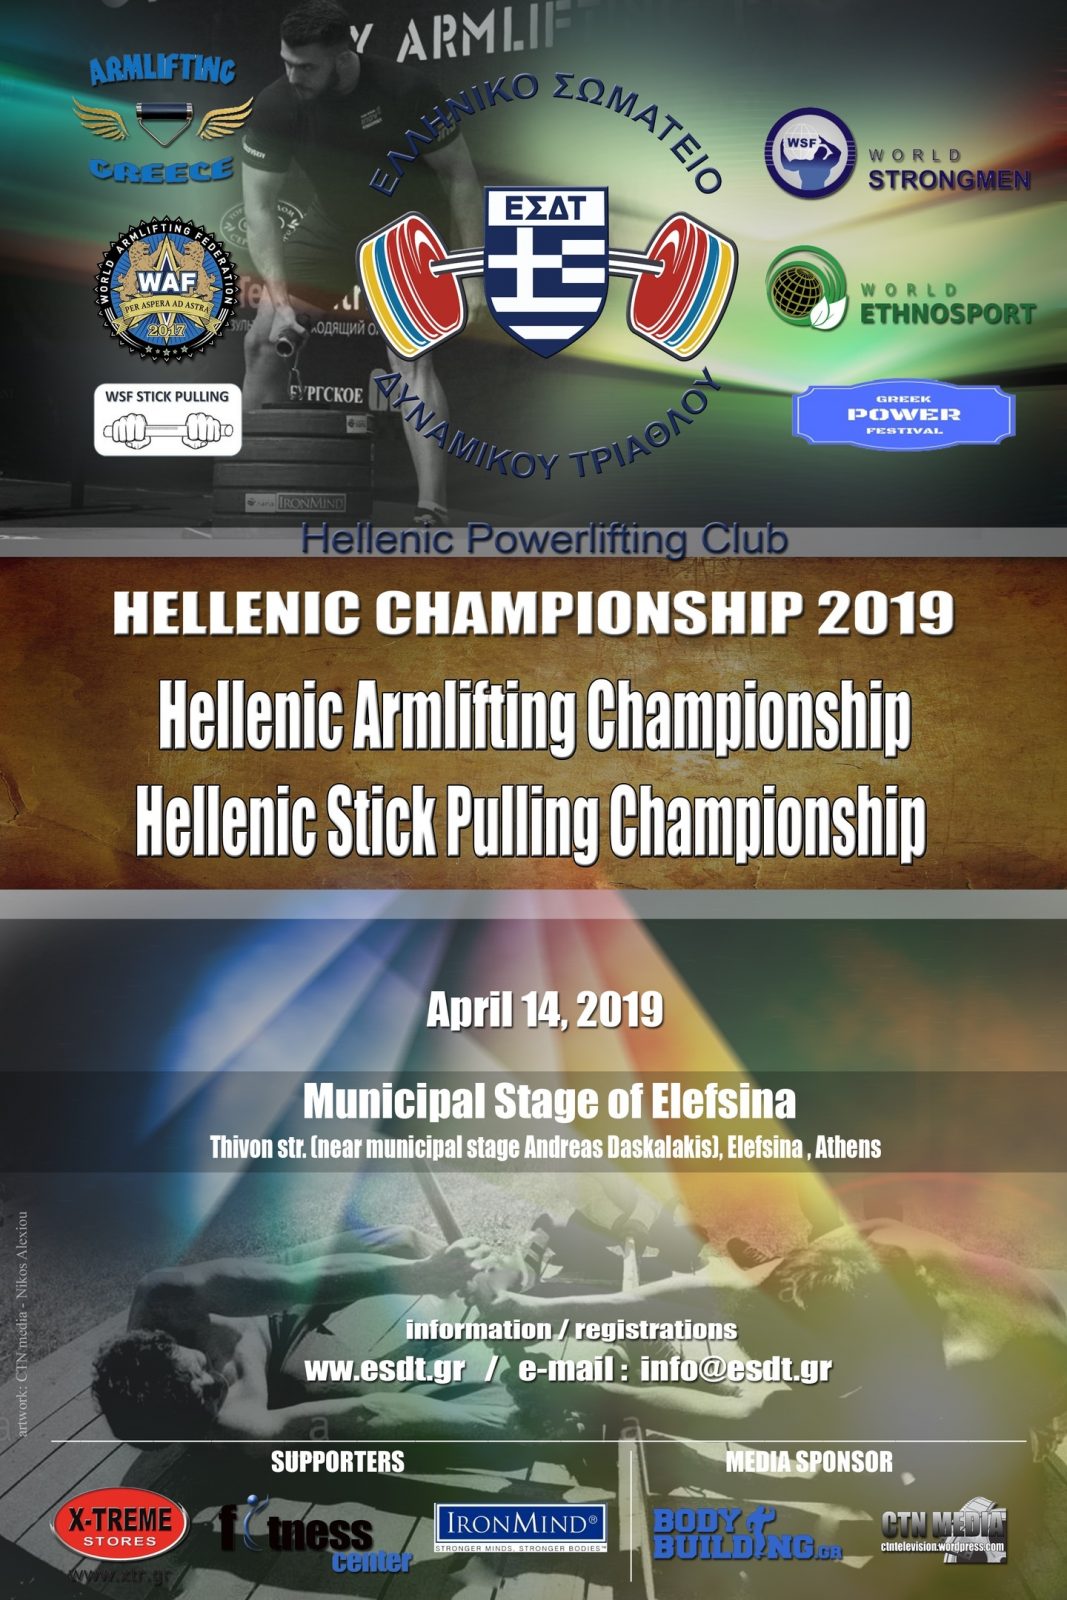 Чемпионат Греции по армлифтингу по версии WAF, Греция / Афины, 14.04.2019